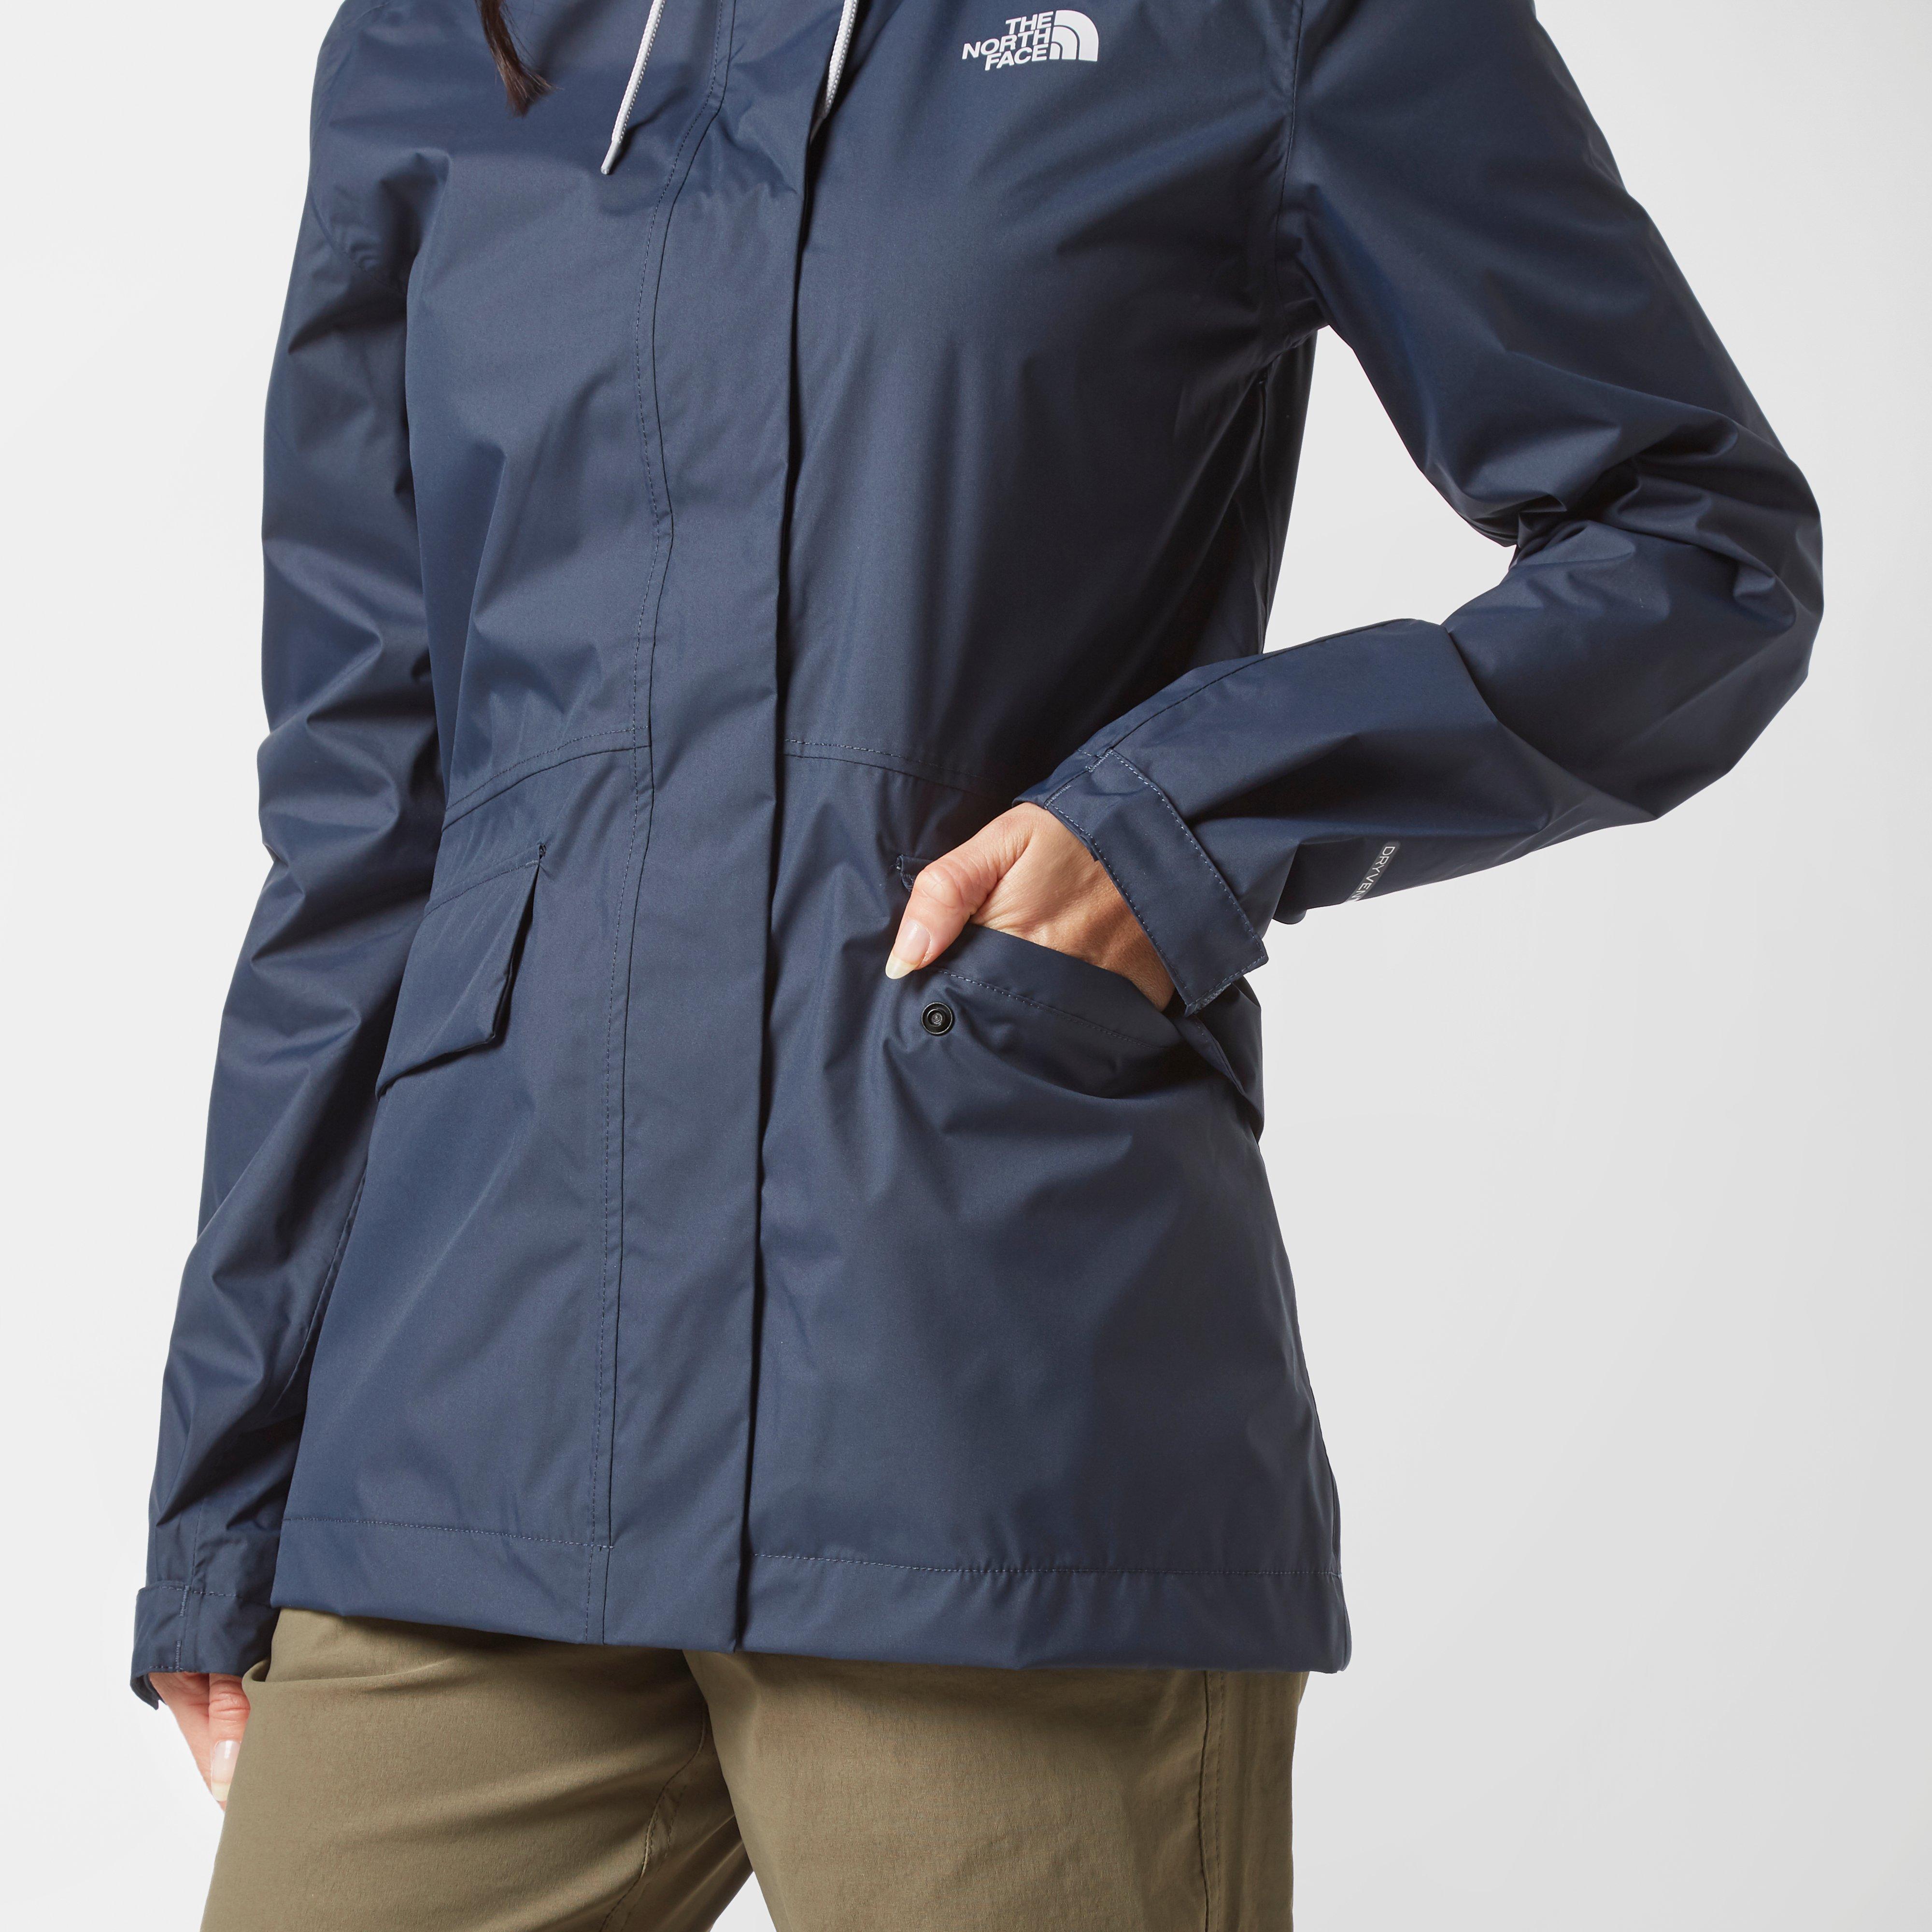 north face lightweight waterproof jacket womens